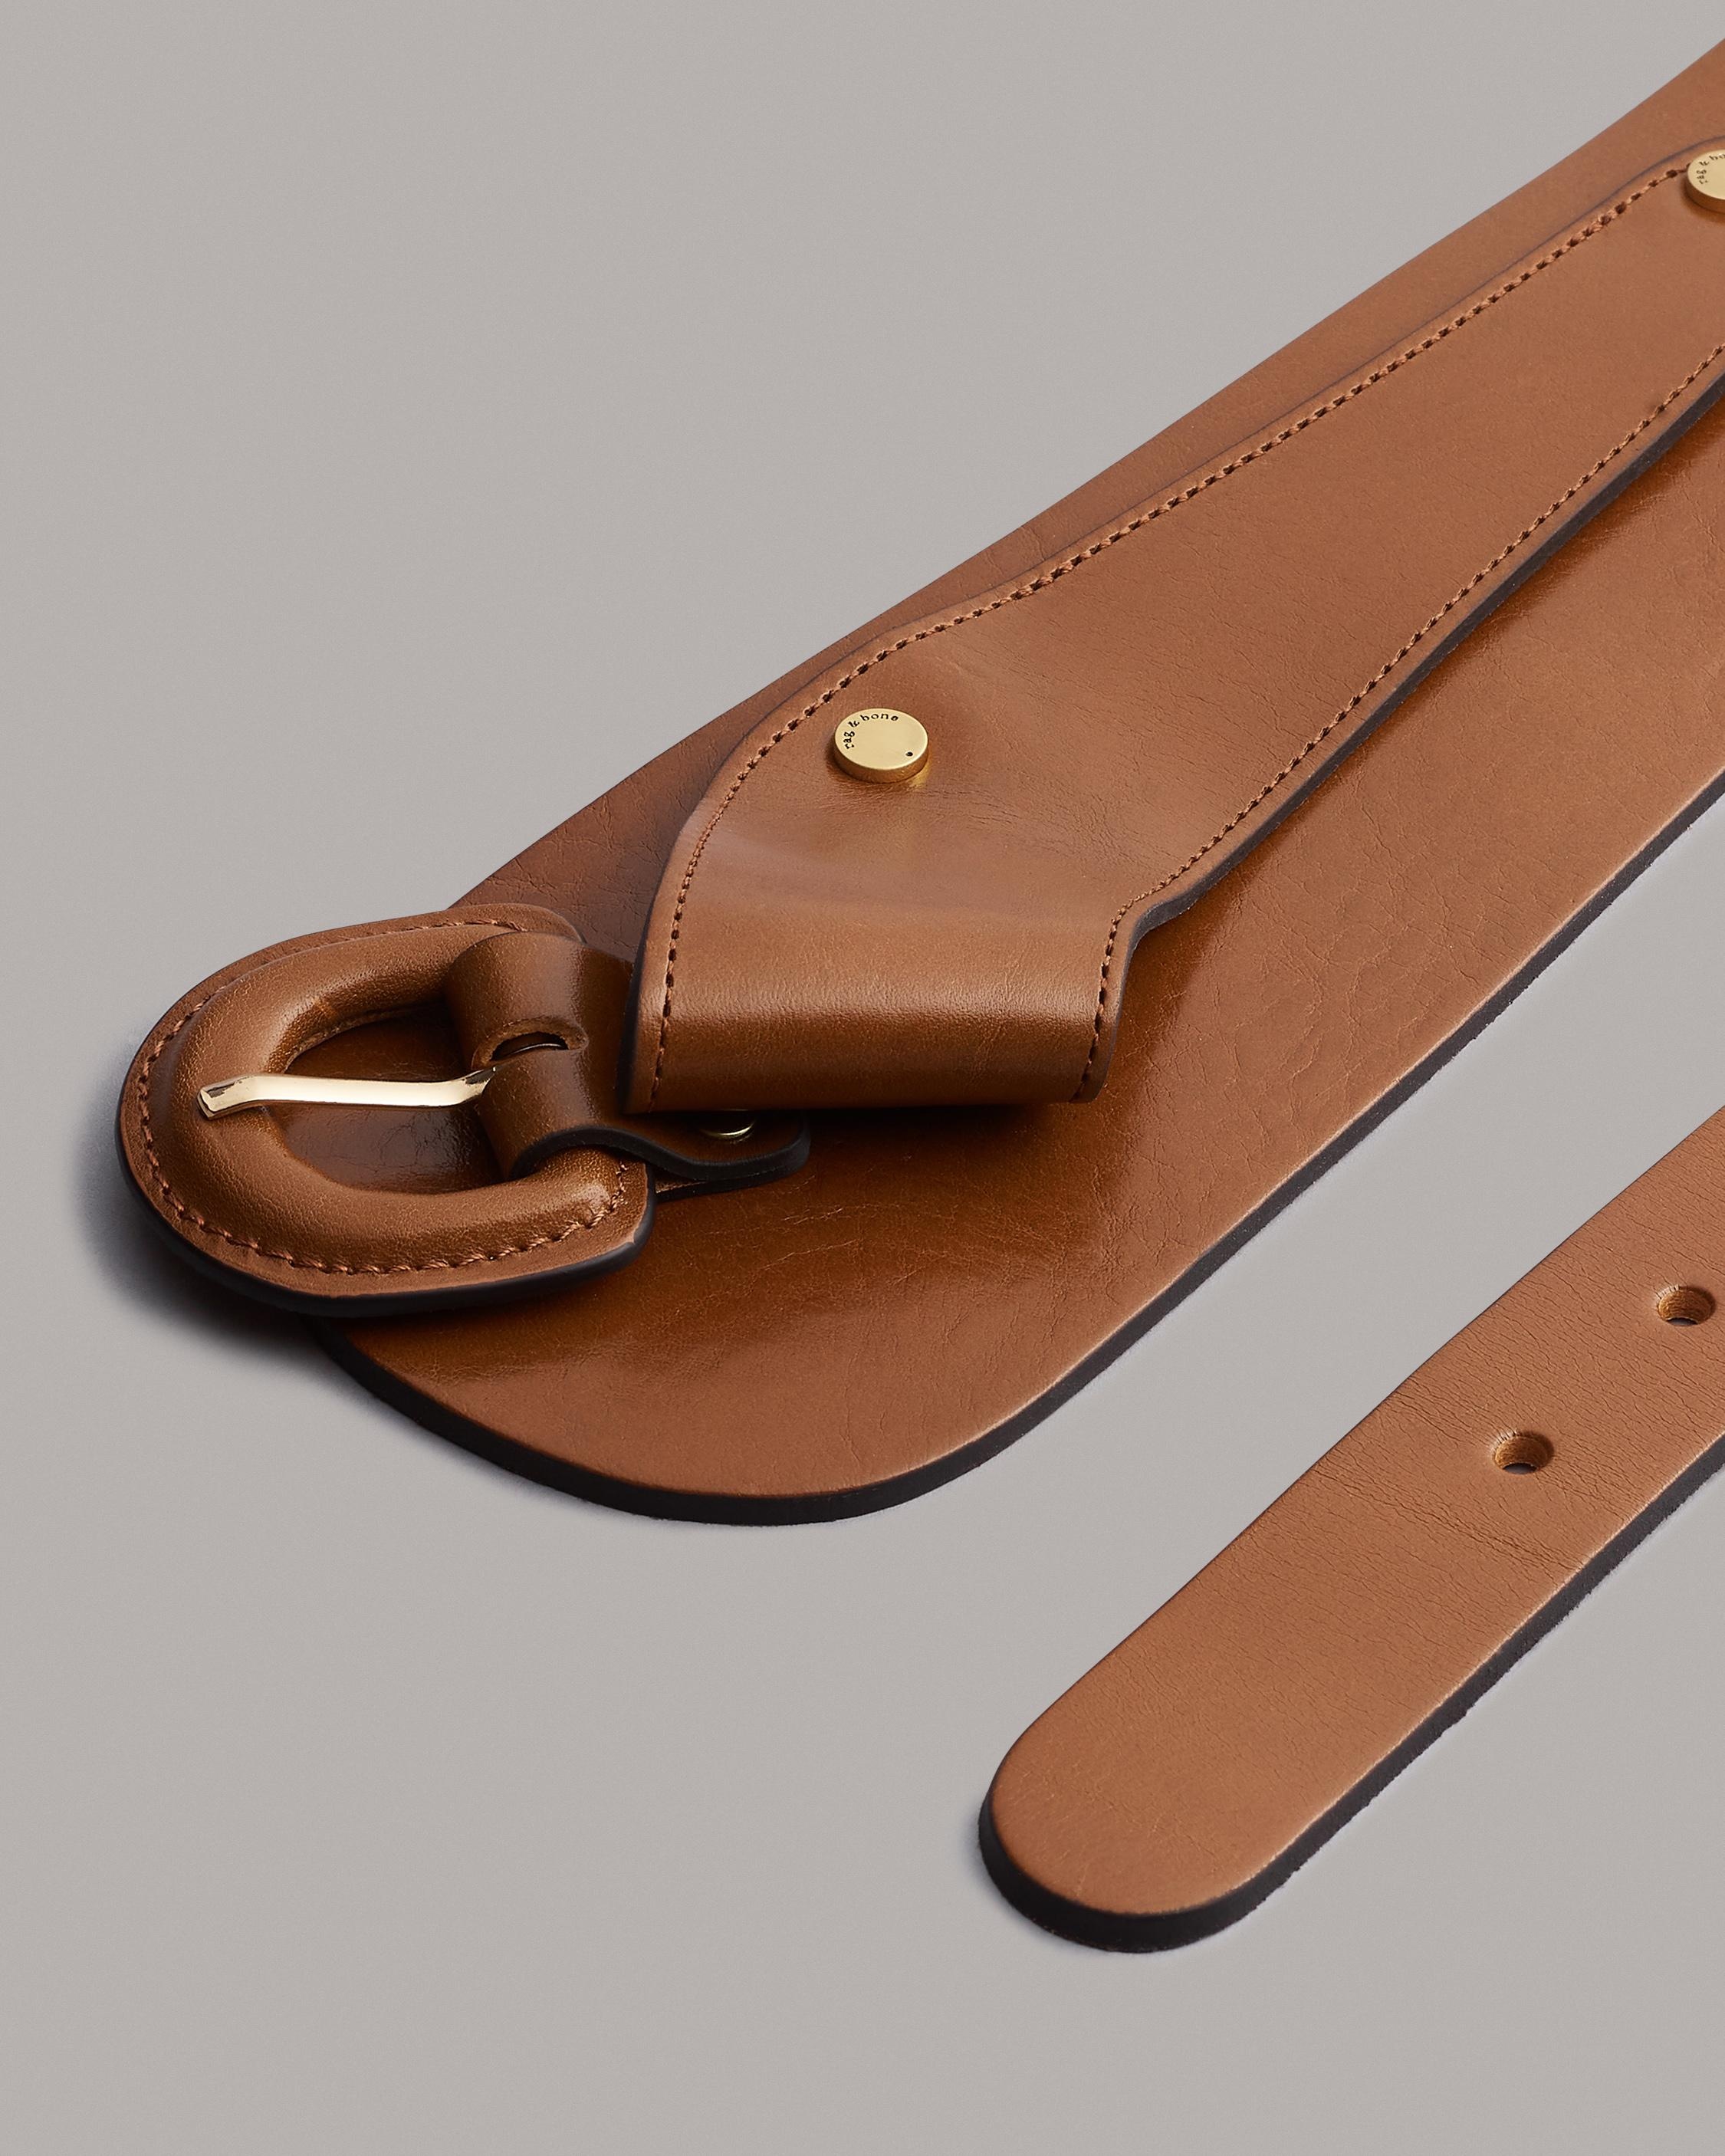 Lanson Waist Belt
Leather Belt - 3